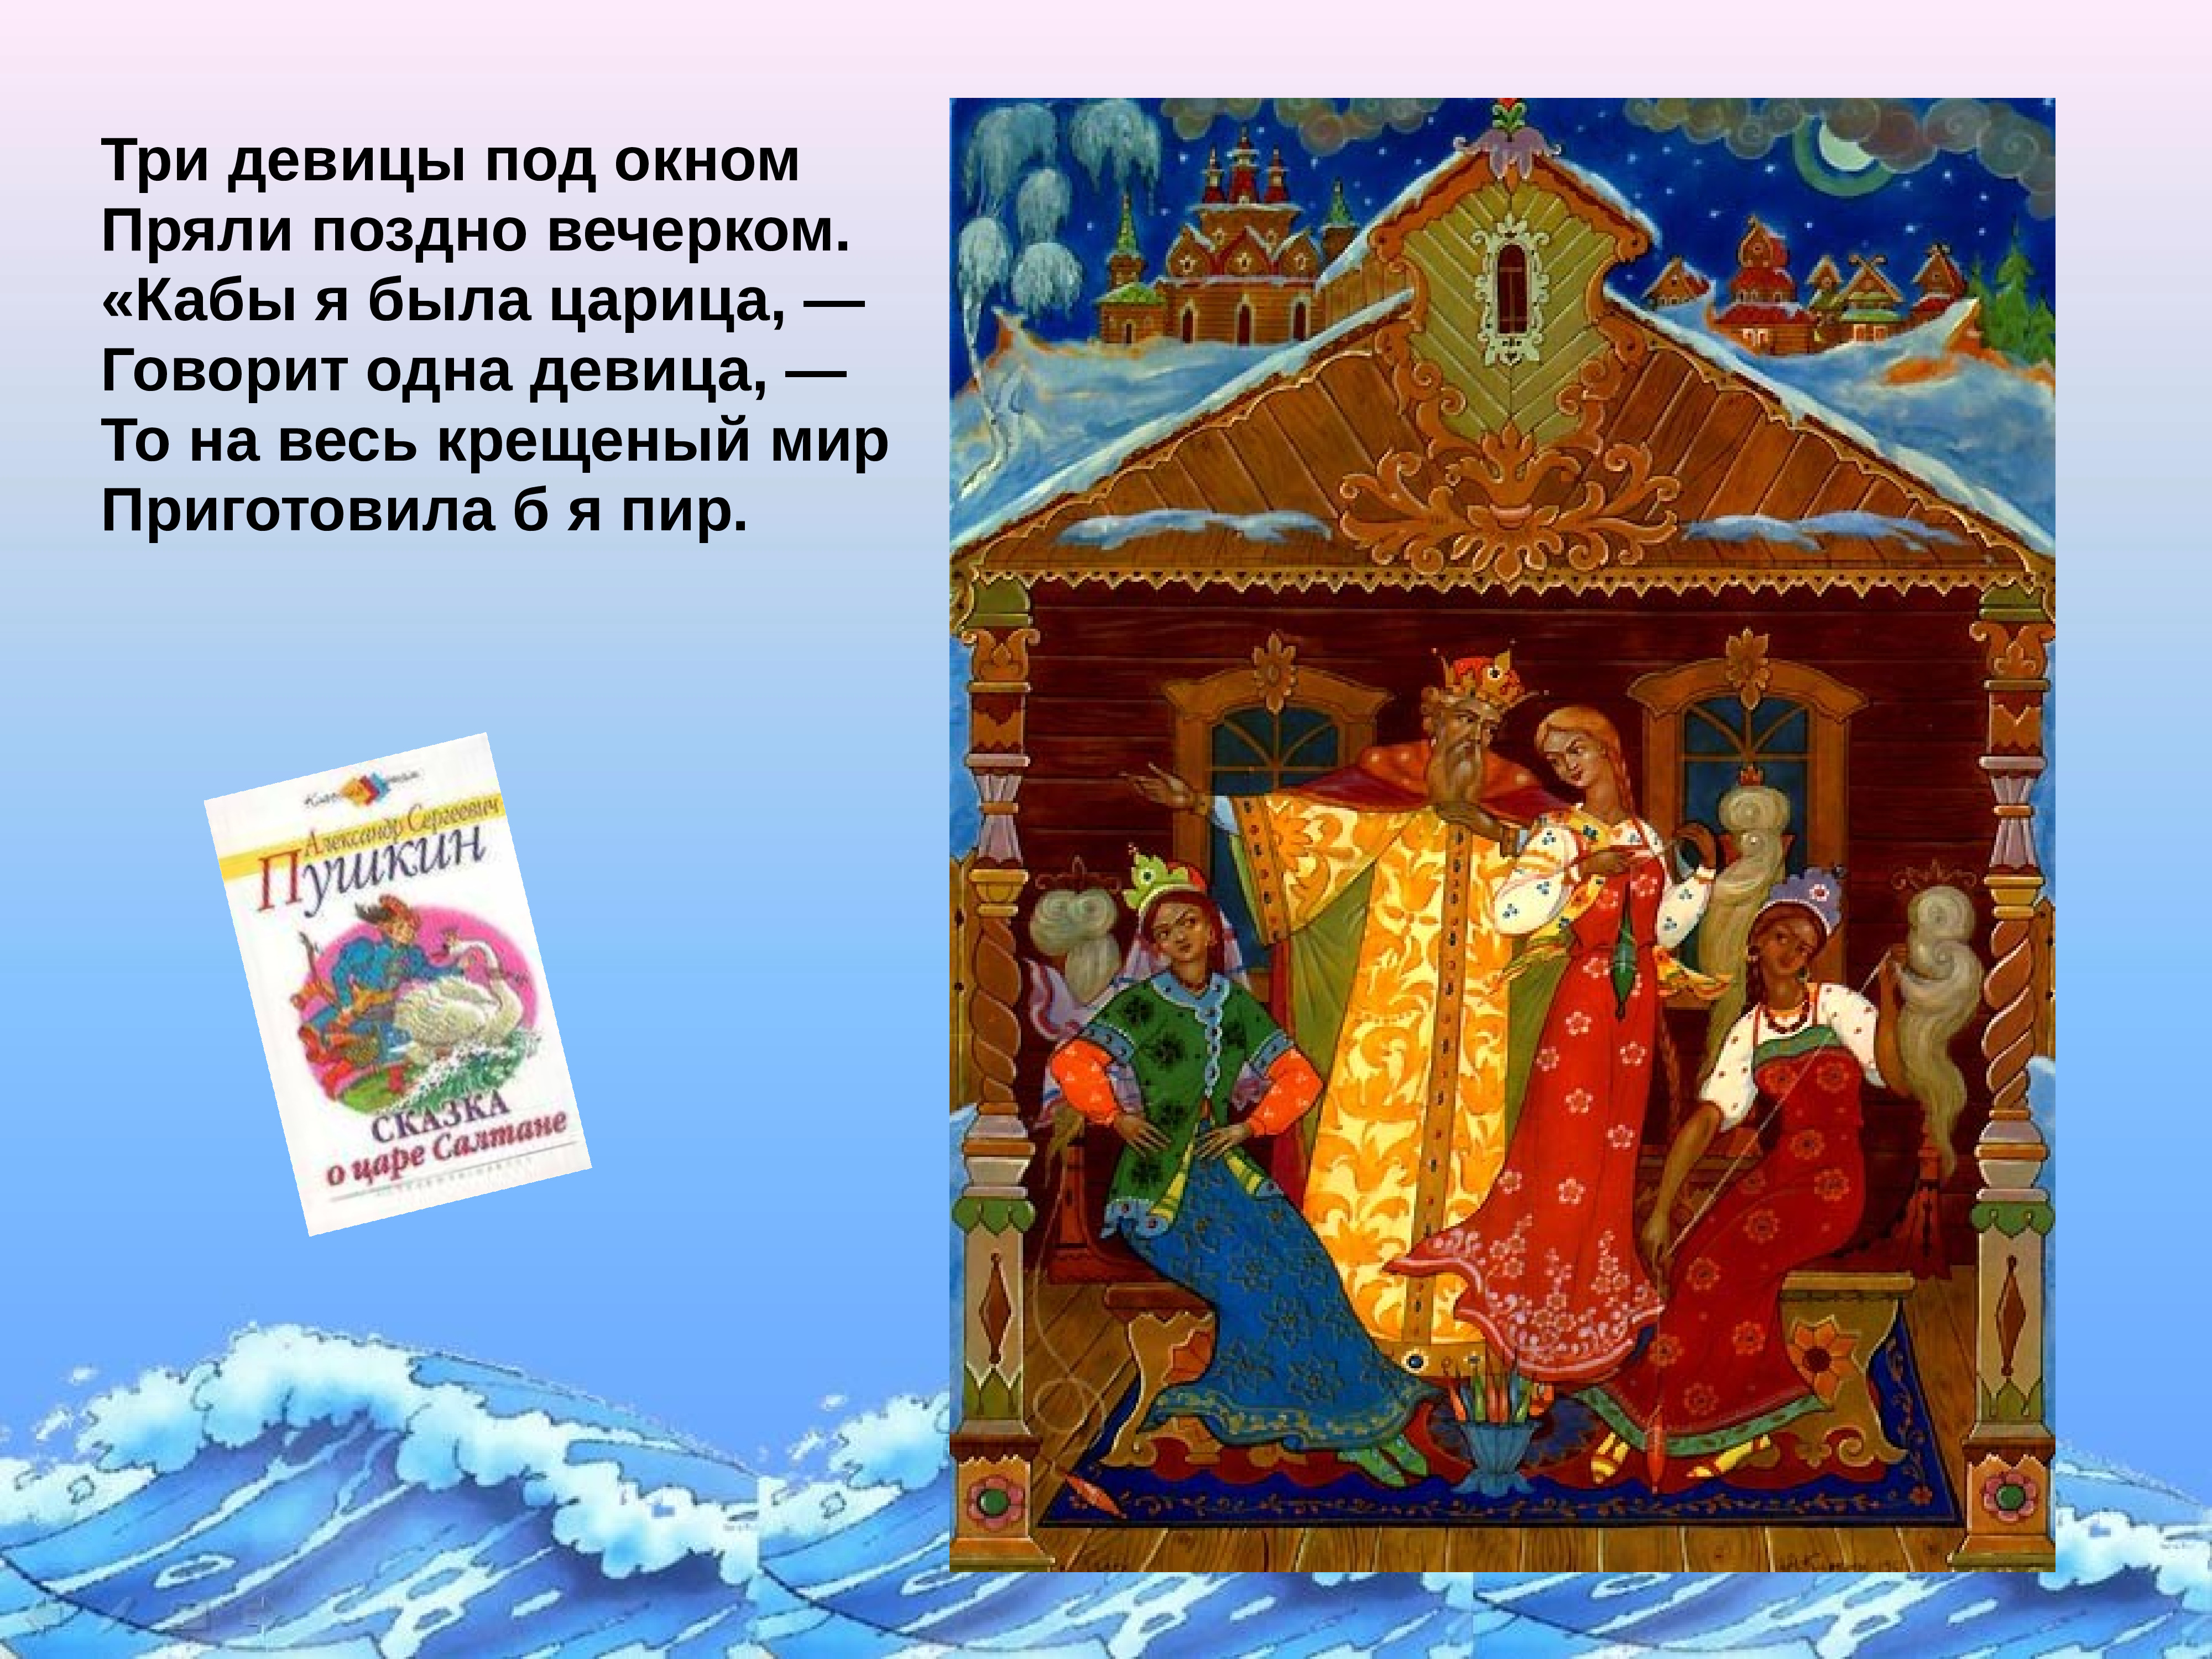 Три девицы сказка Пушкина